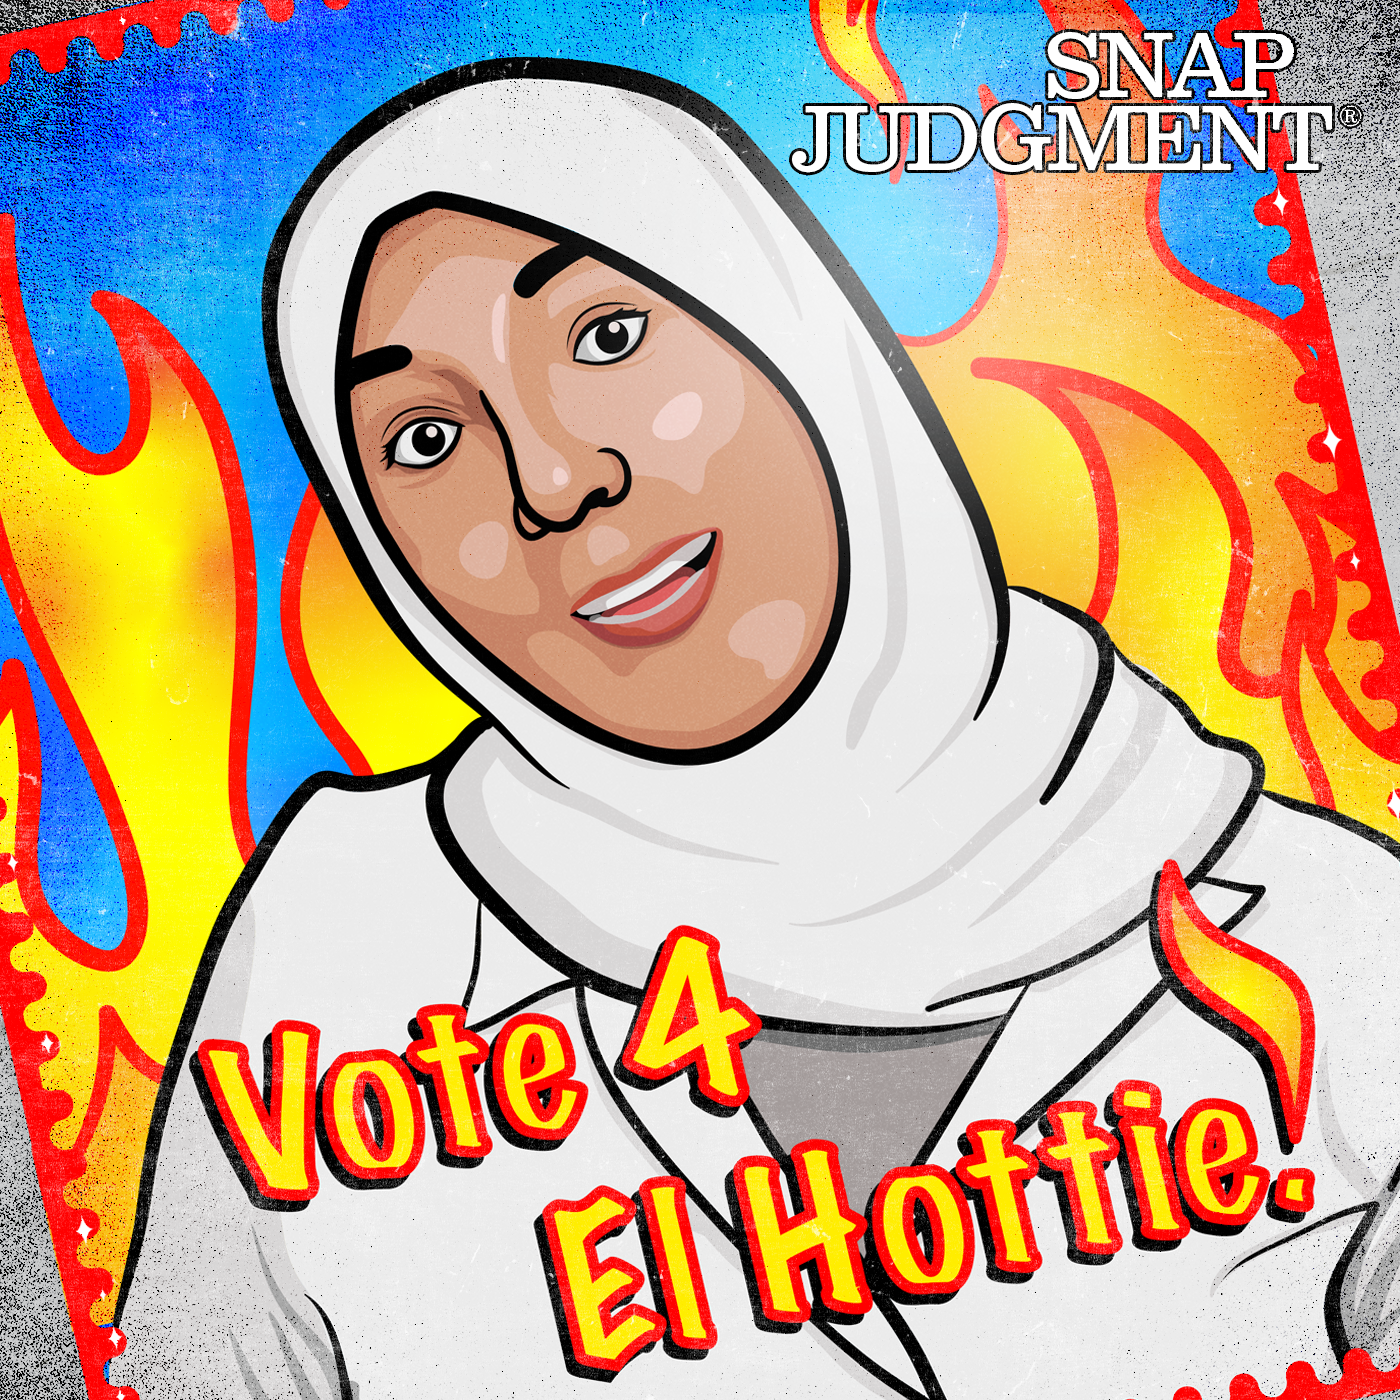 Thumbnail for "Vote for El Hottie".